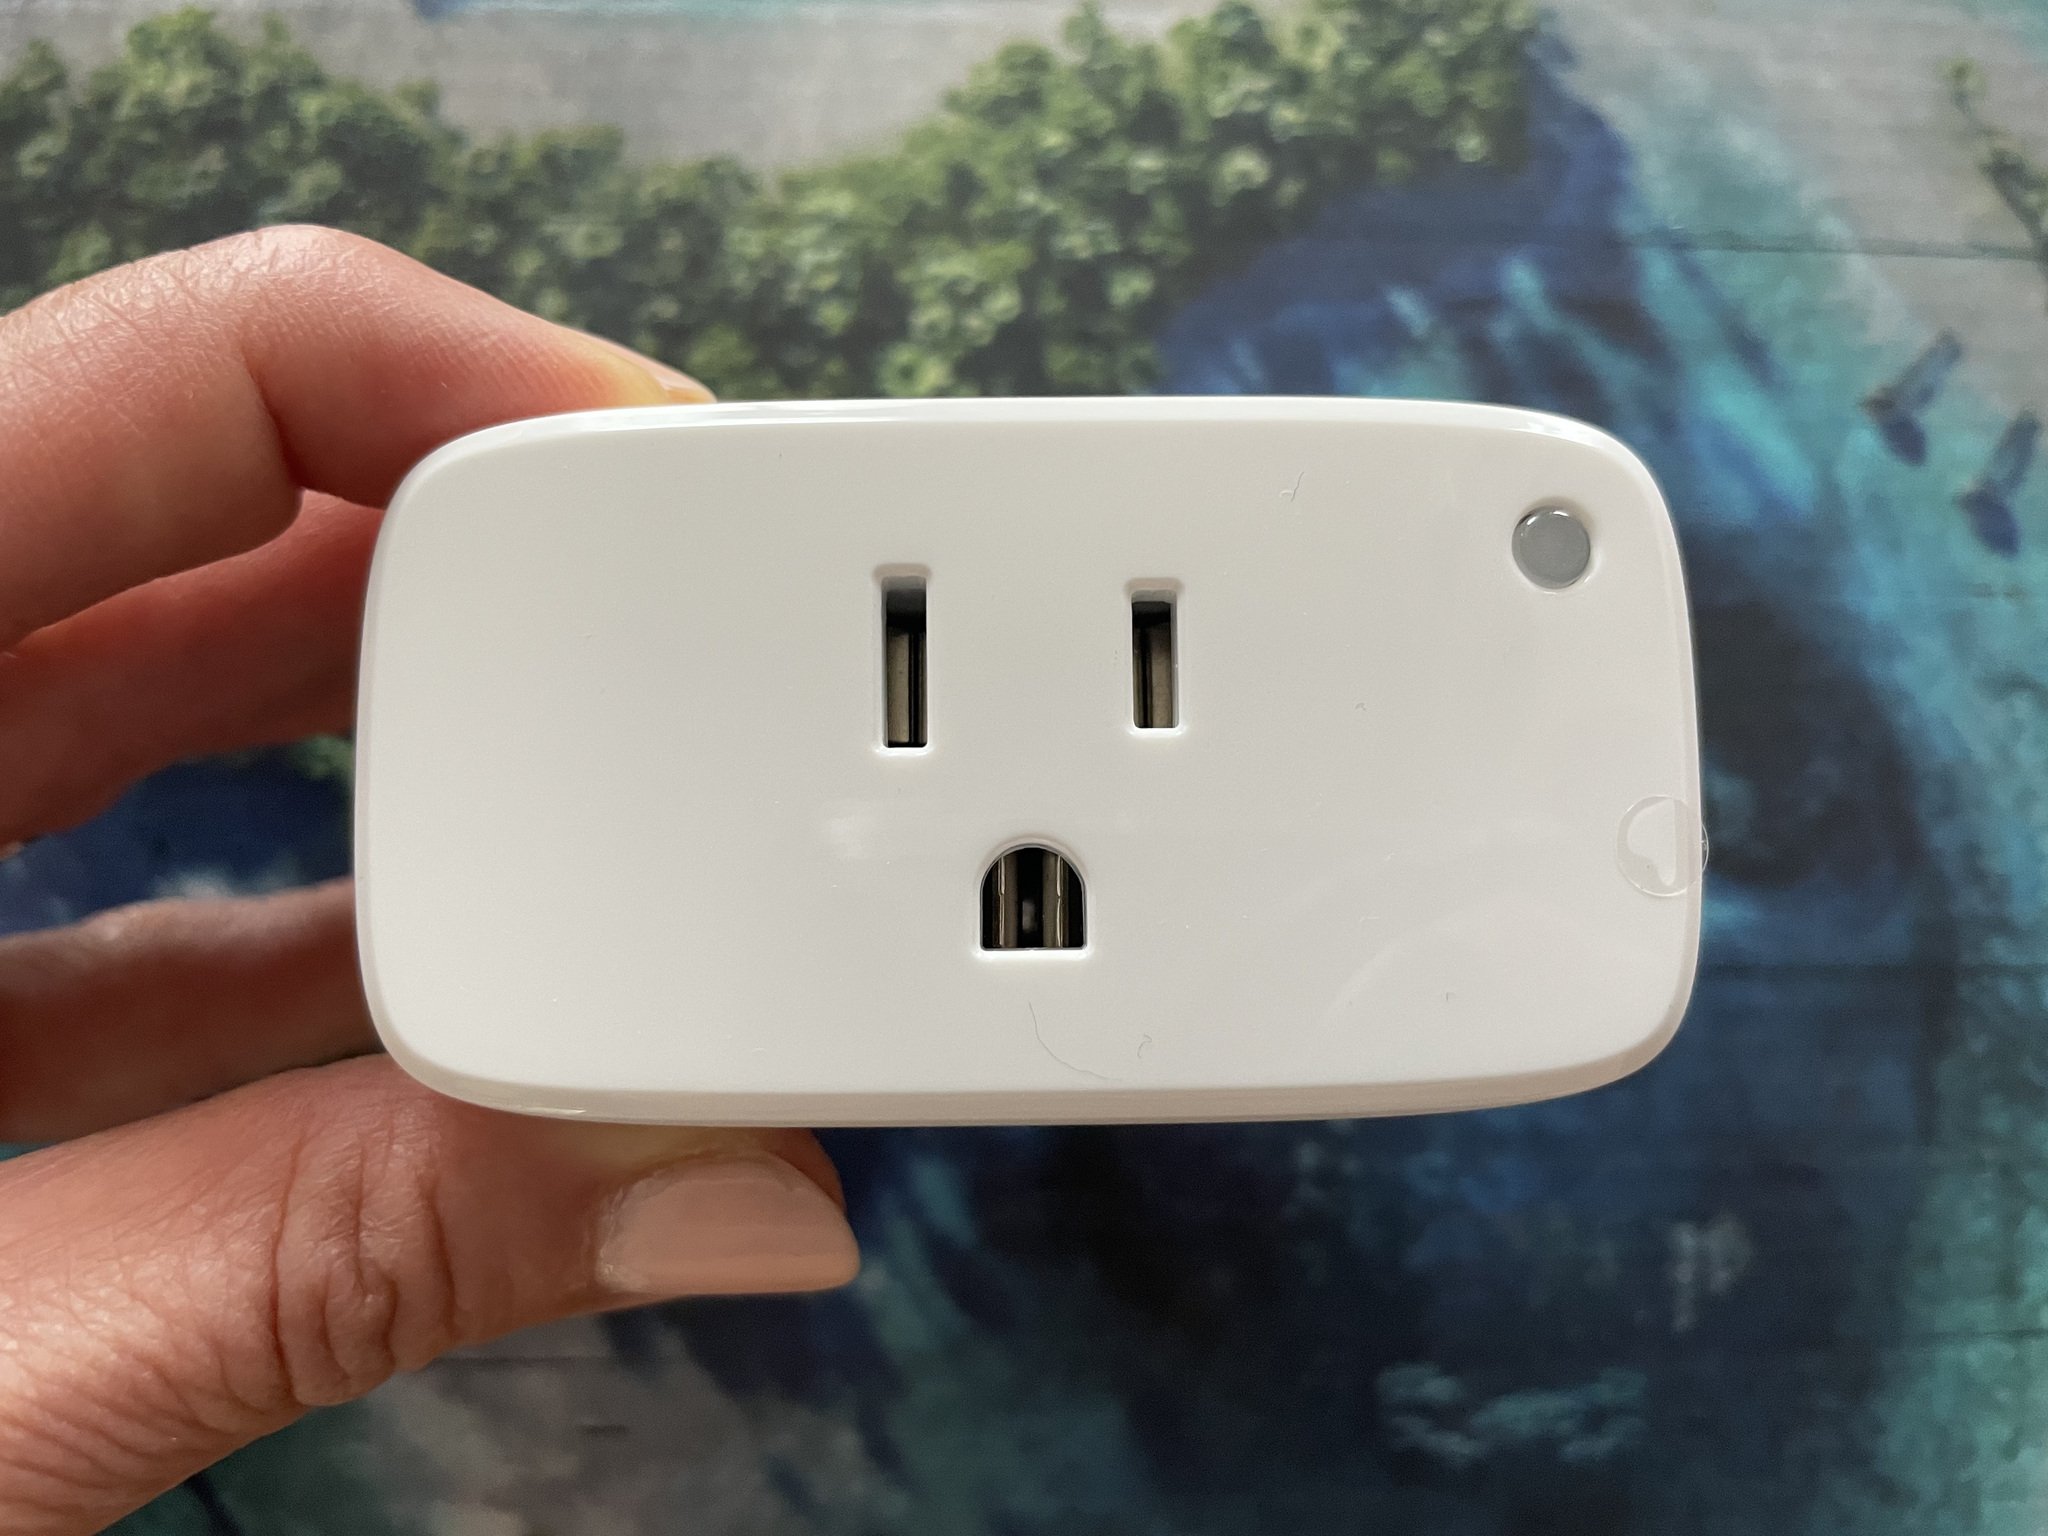 VOCOlinc HomeKit Smart Plug Works with Alexa, Apple Home, Google Assistant, WiFi Smart Plug That Work with Alexa, Electrical Tim